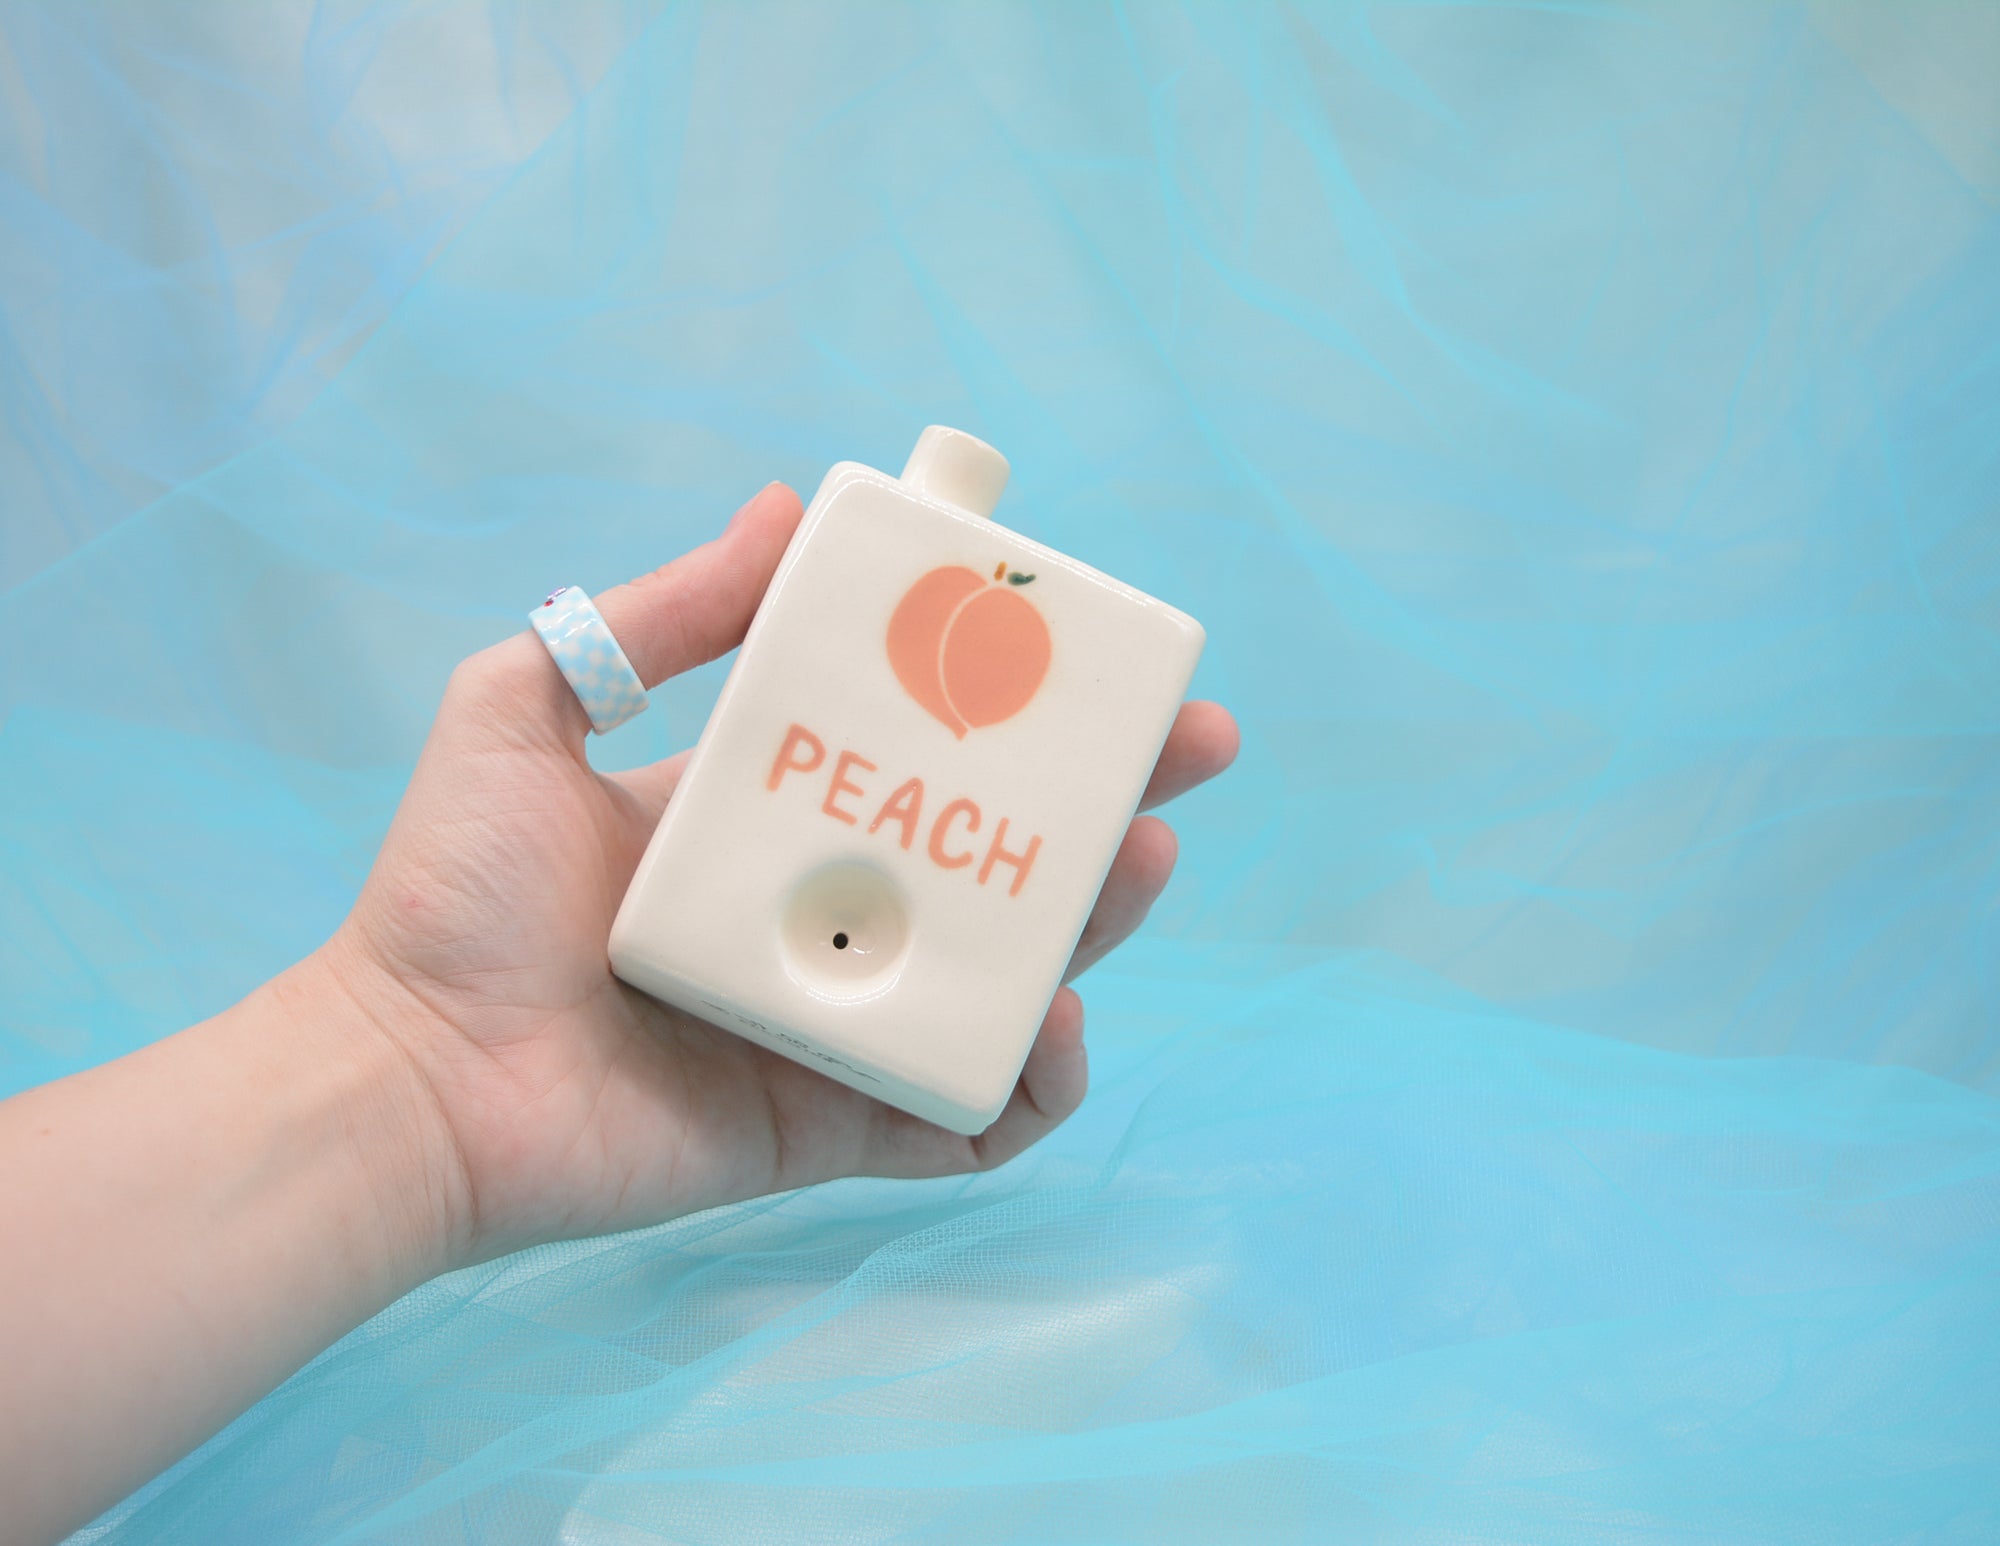 Peach Juice Box